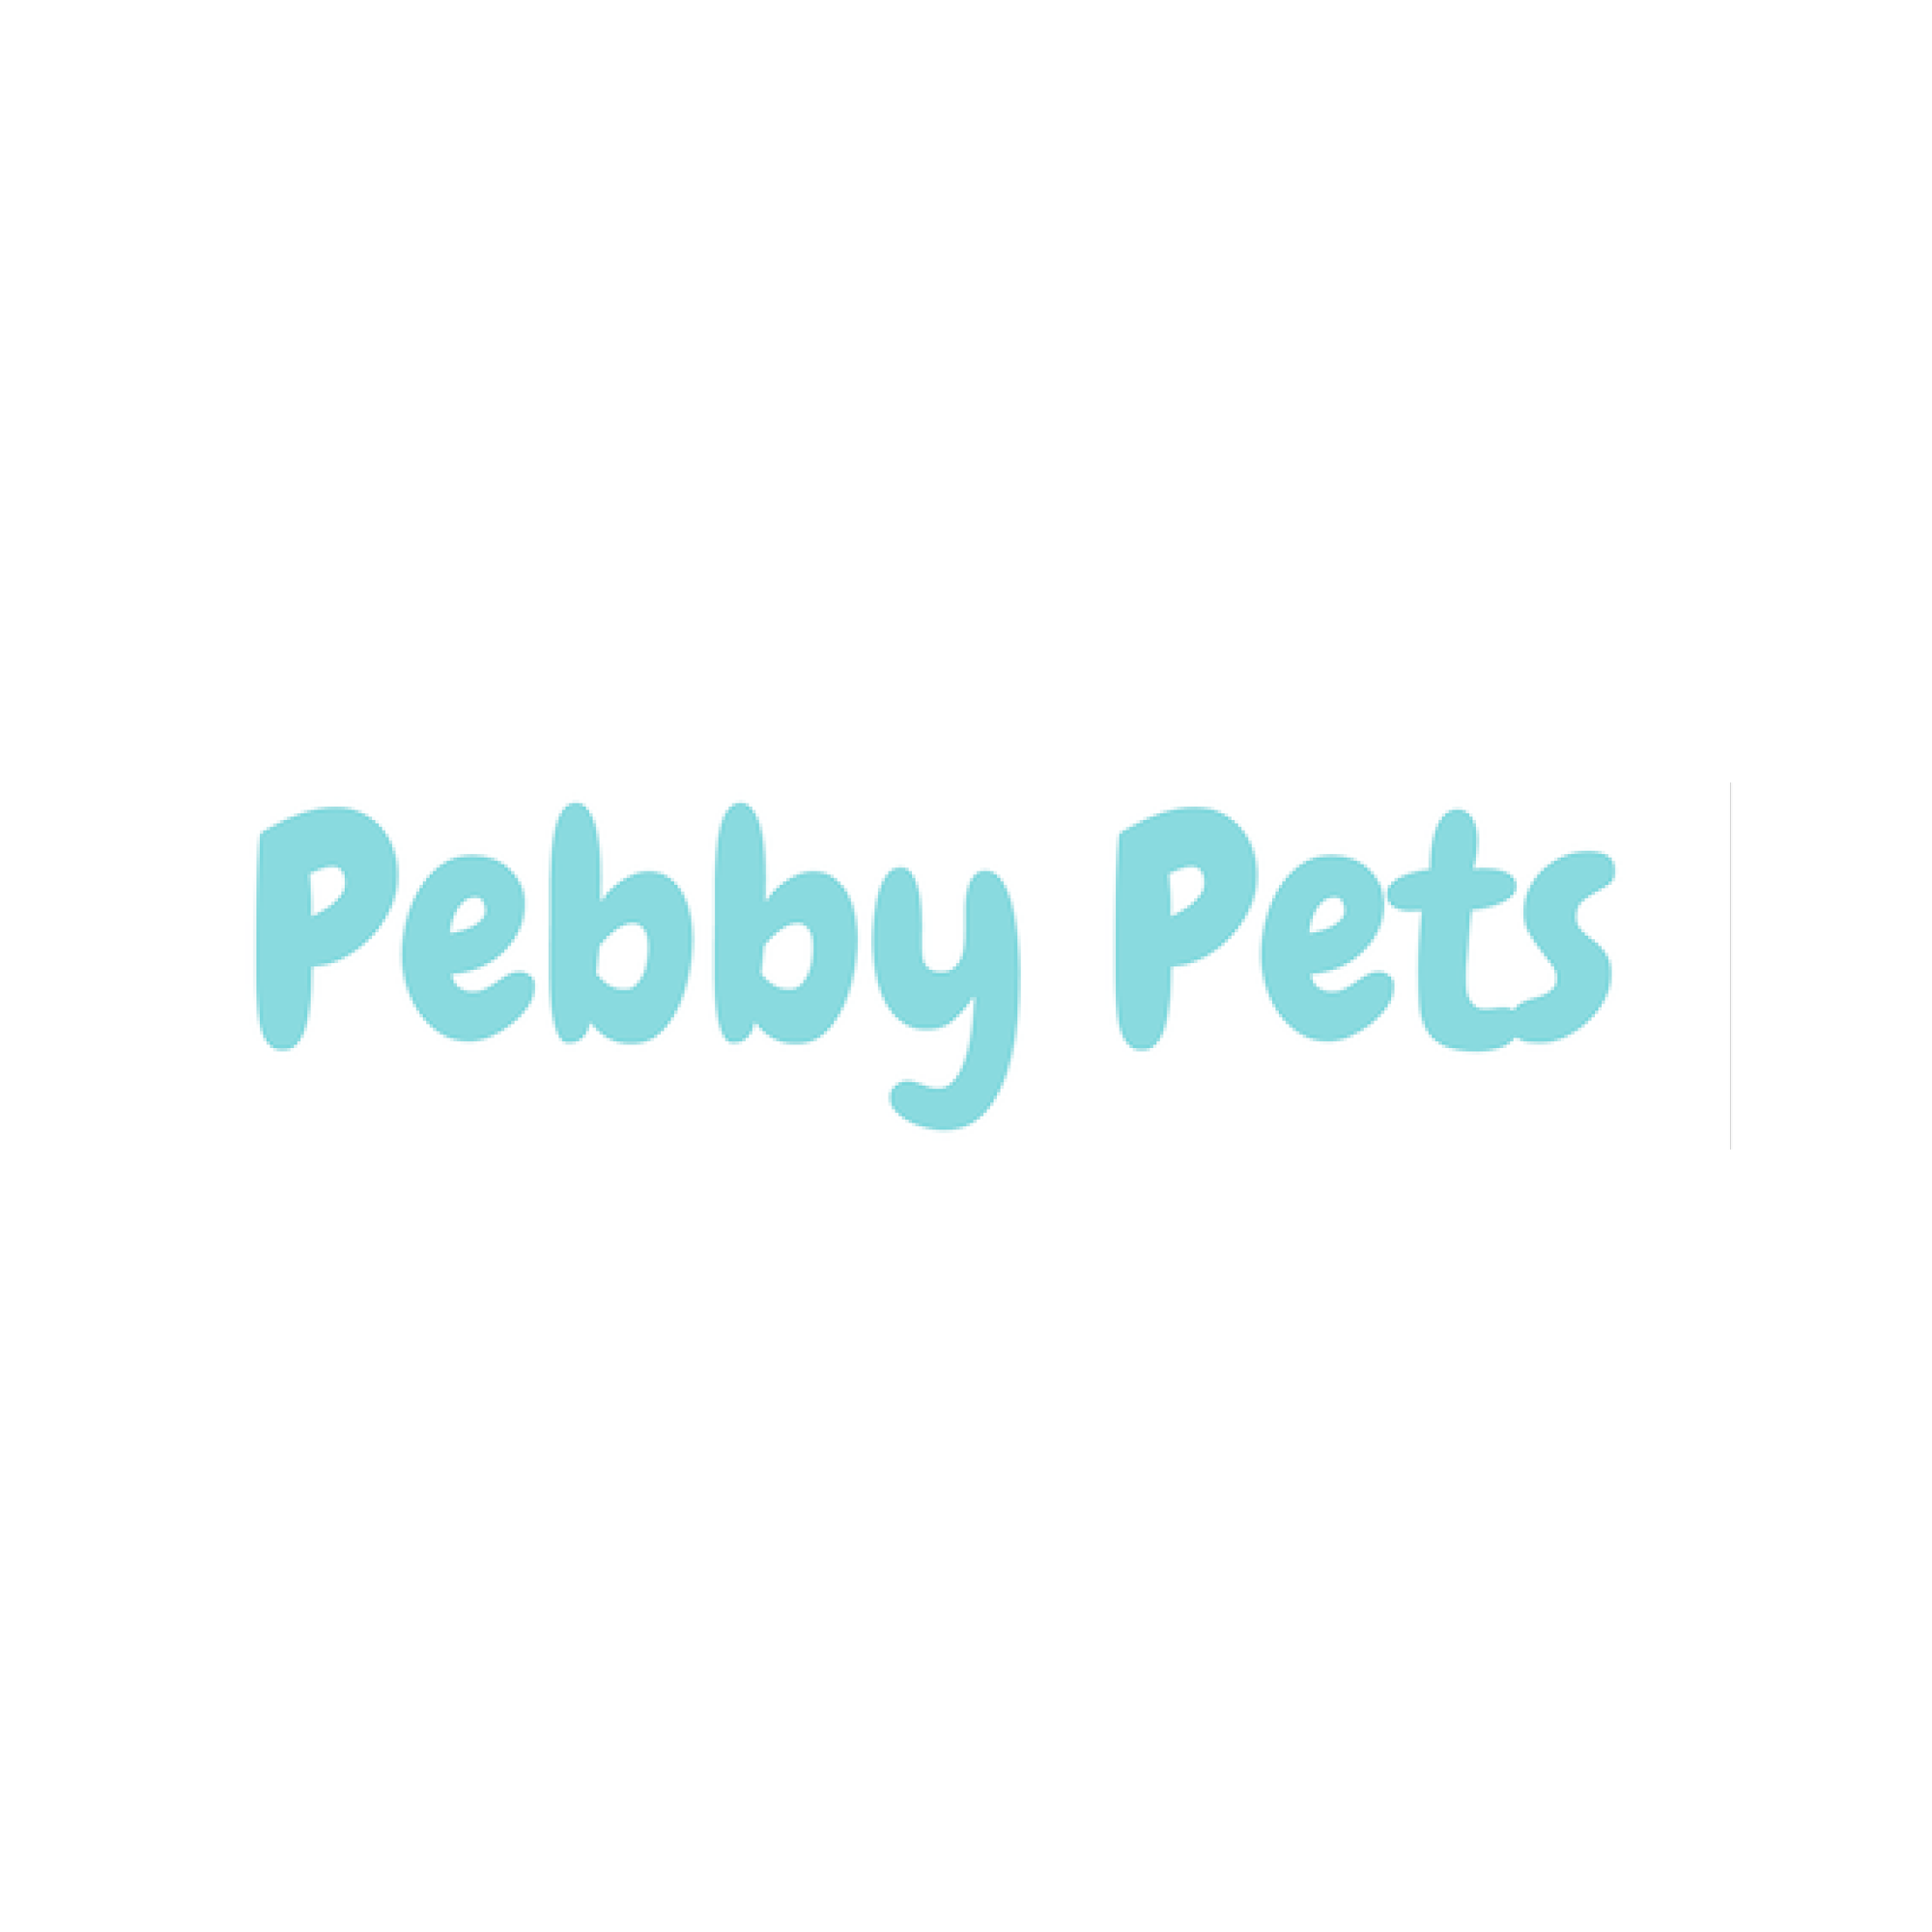 Pebby